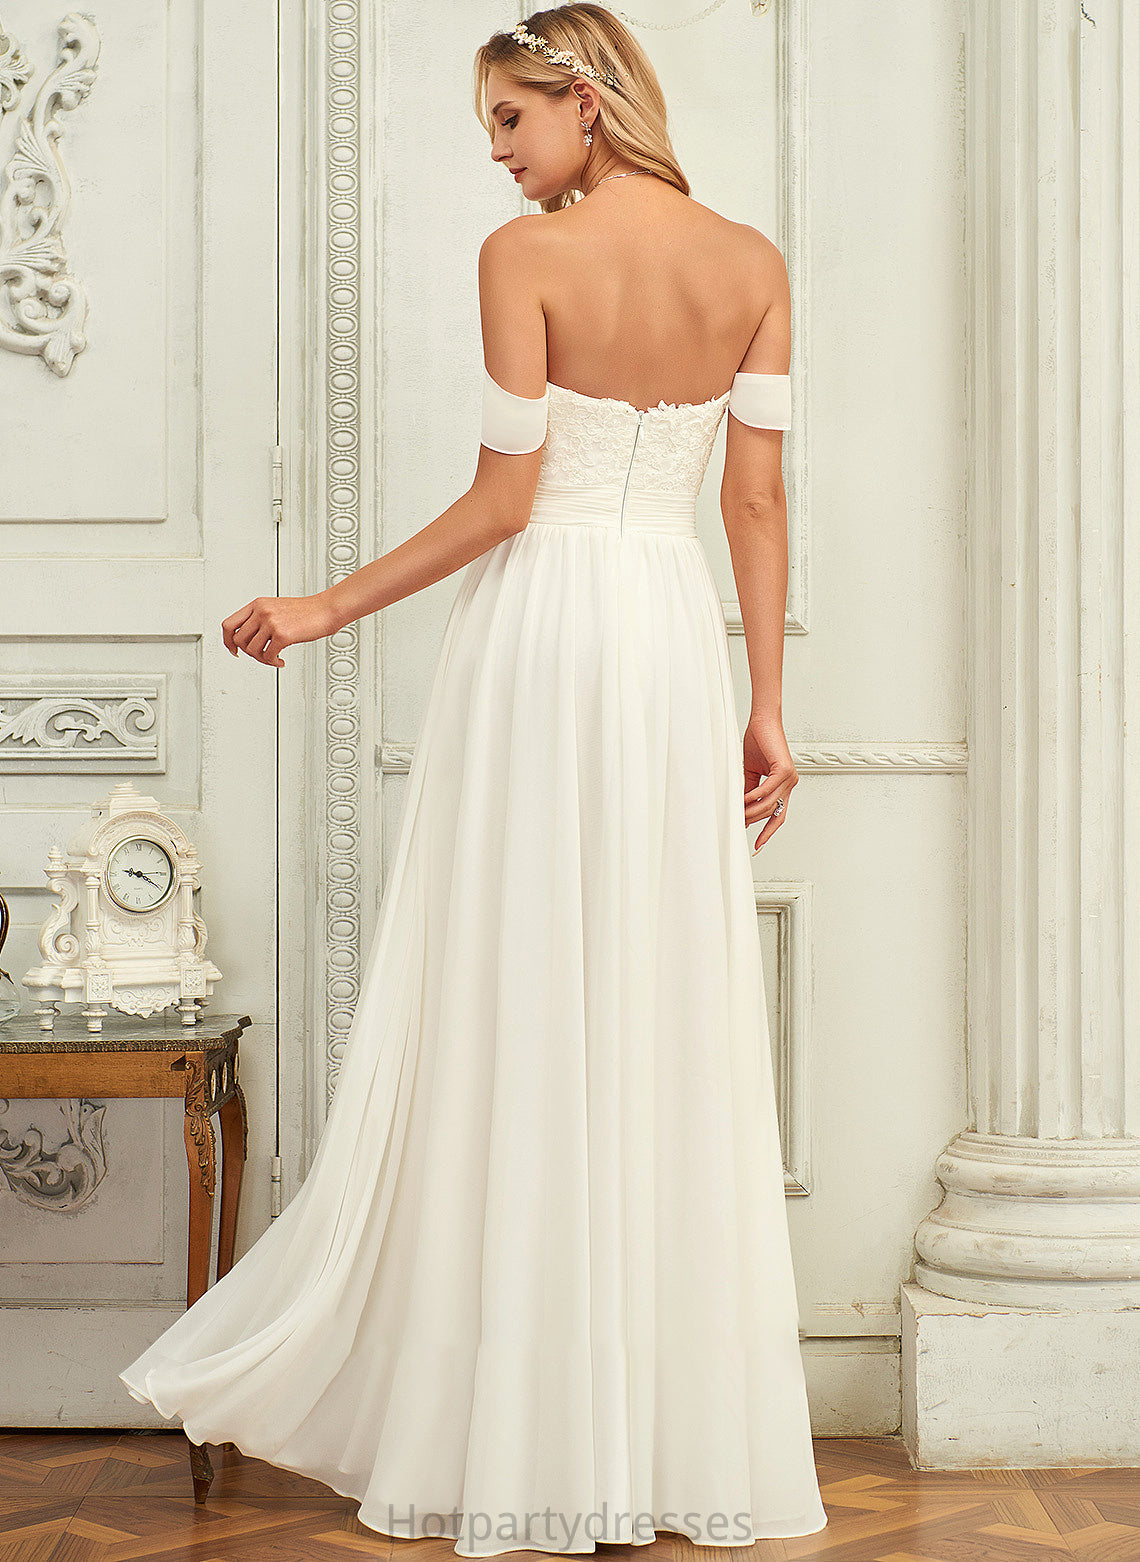 Lace Tia Wedding Dresses Dress Floor-Length Off-the-Shoulder Wedding A-Line Chiffon